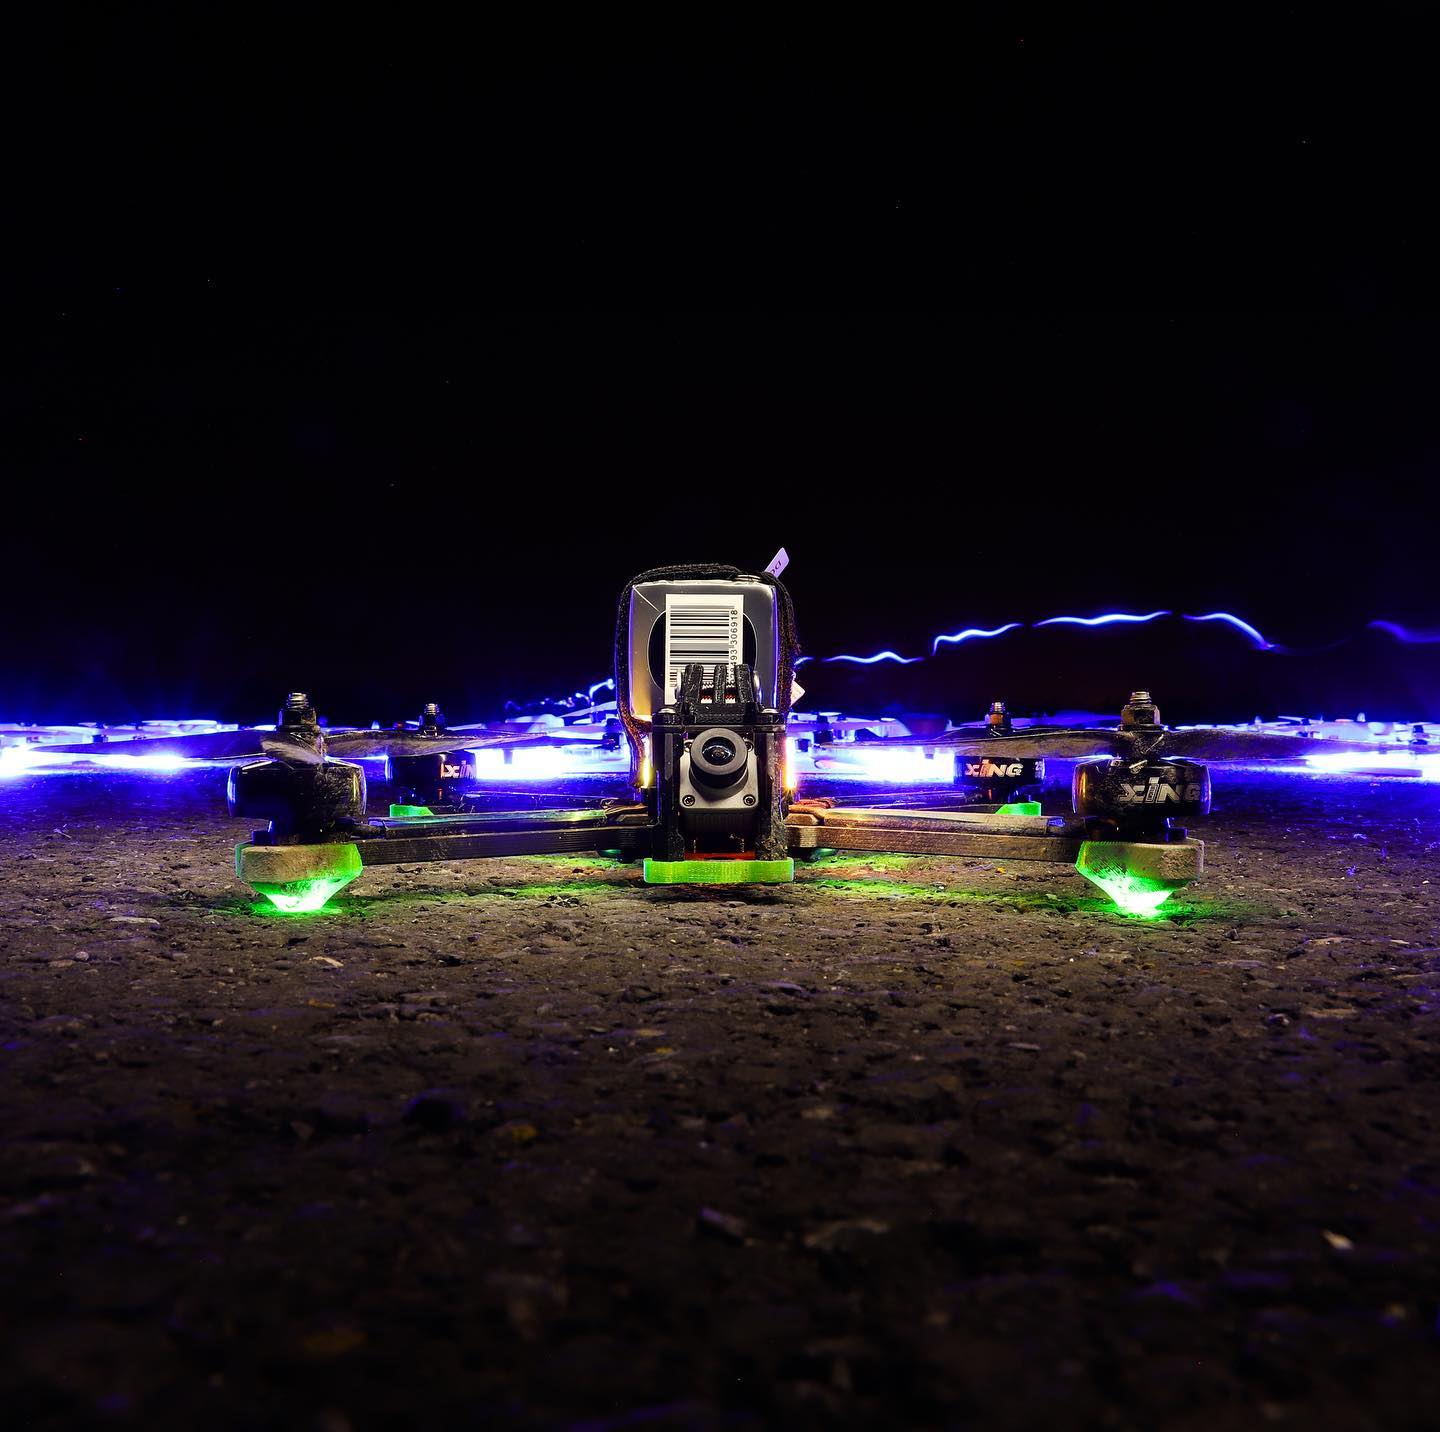 Nouveau FPV + spectacle de drones + Lightpainting = ✨

•
•
•

#drone #lightpainting #iflight #nazgul #drones #dji #mavic #dronestagram #dronepilot #france #instareims #skyhilife #dronegram #dronepic #dronepilot #vuduciel #dronenature #droneoftheday #dronedujour #frenchtech #skyhilife #unitedbydrone #dronefolio #dronemultimedia #dronepals #dronedose #ig_france #loves_france #djiglobal #igersreims